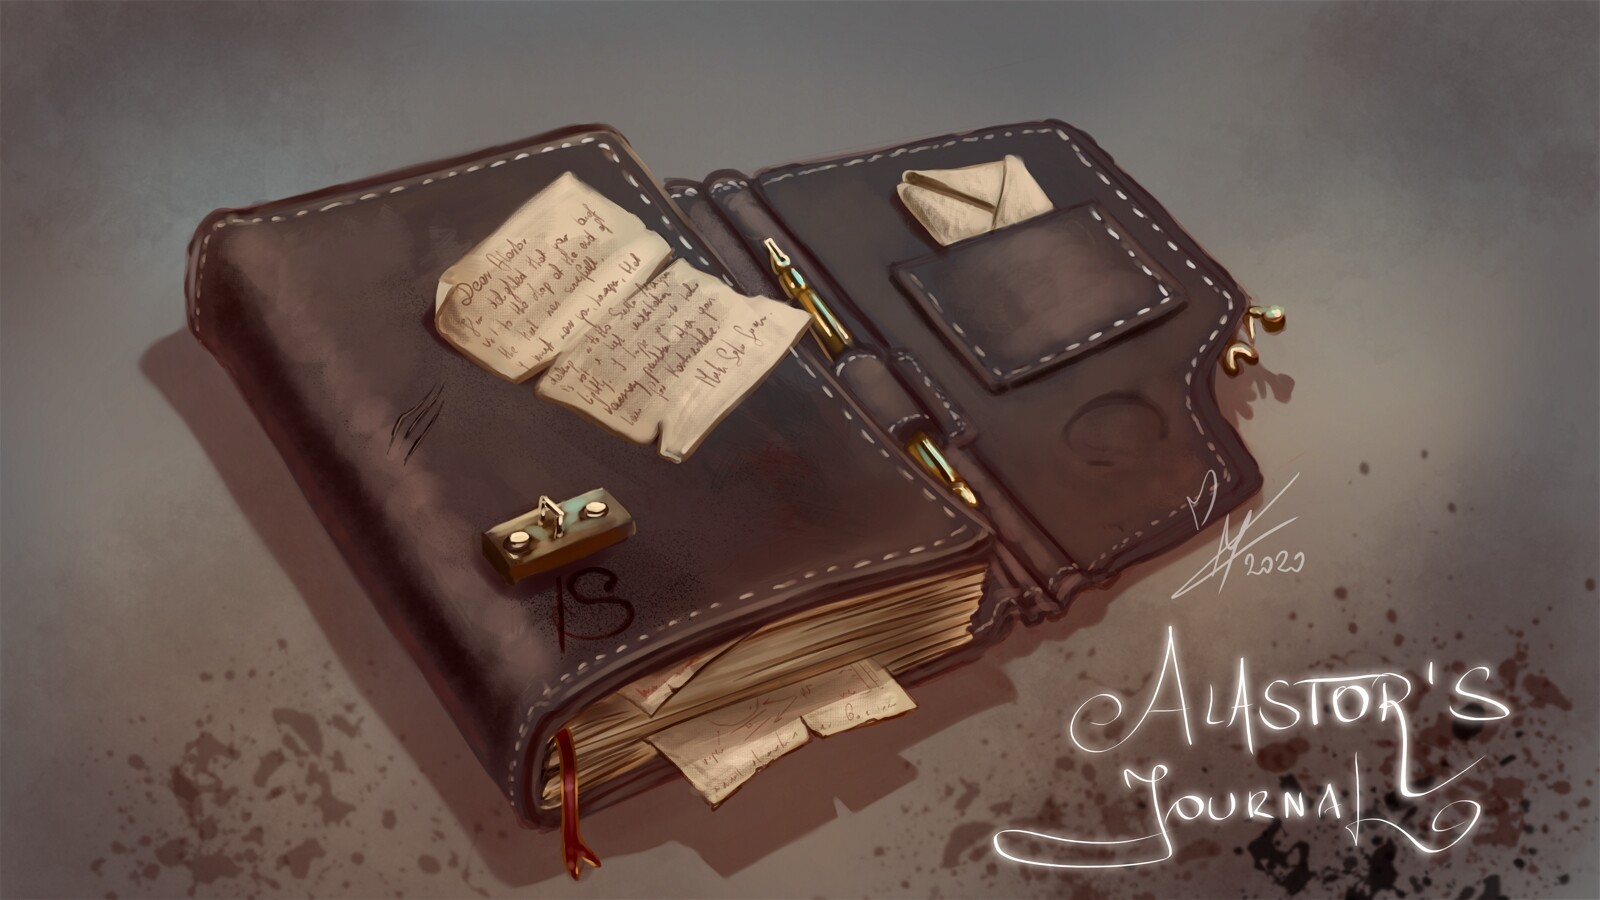 Beginner's spellbook/journal